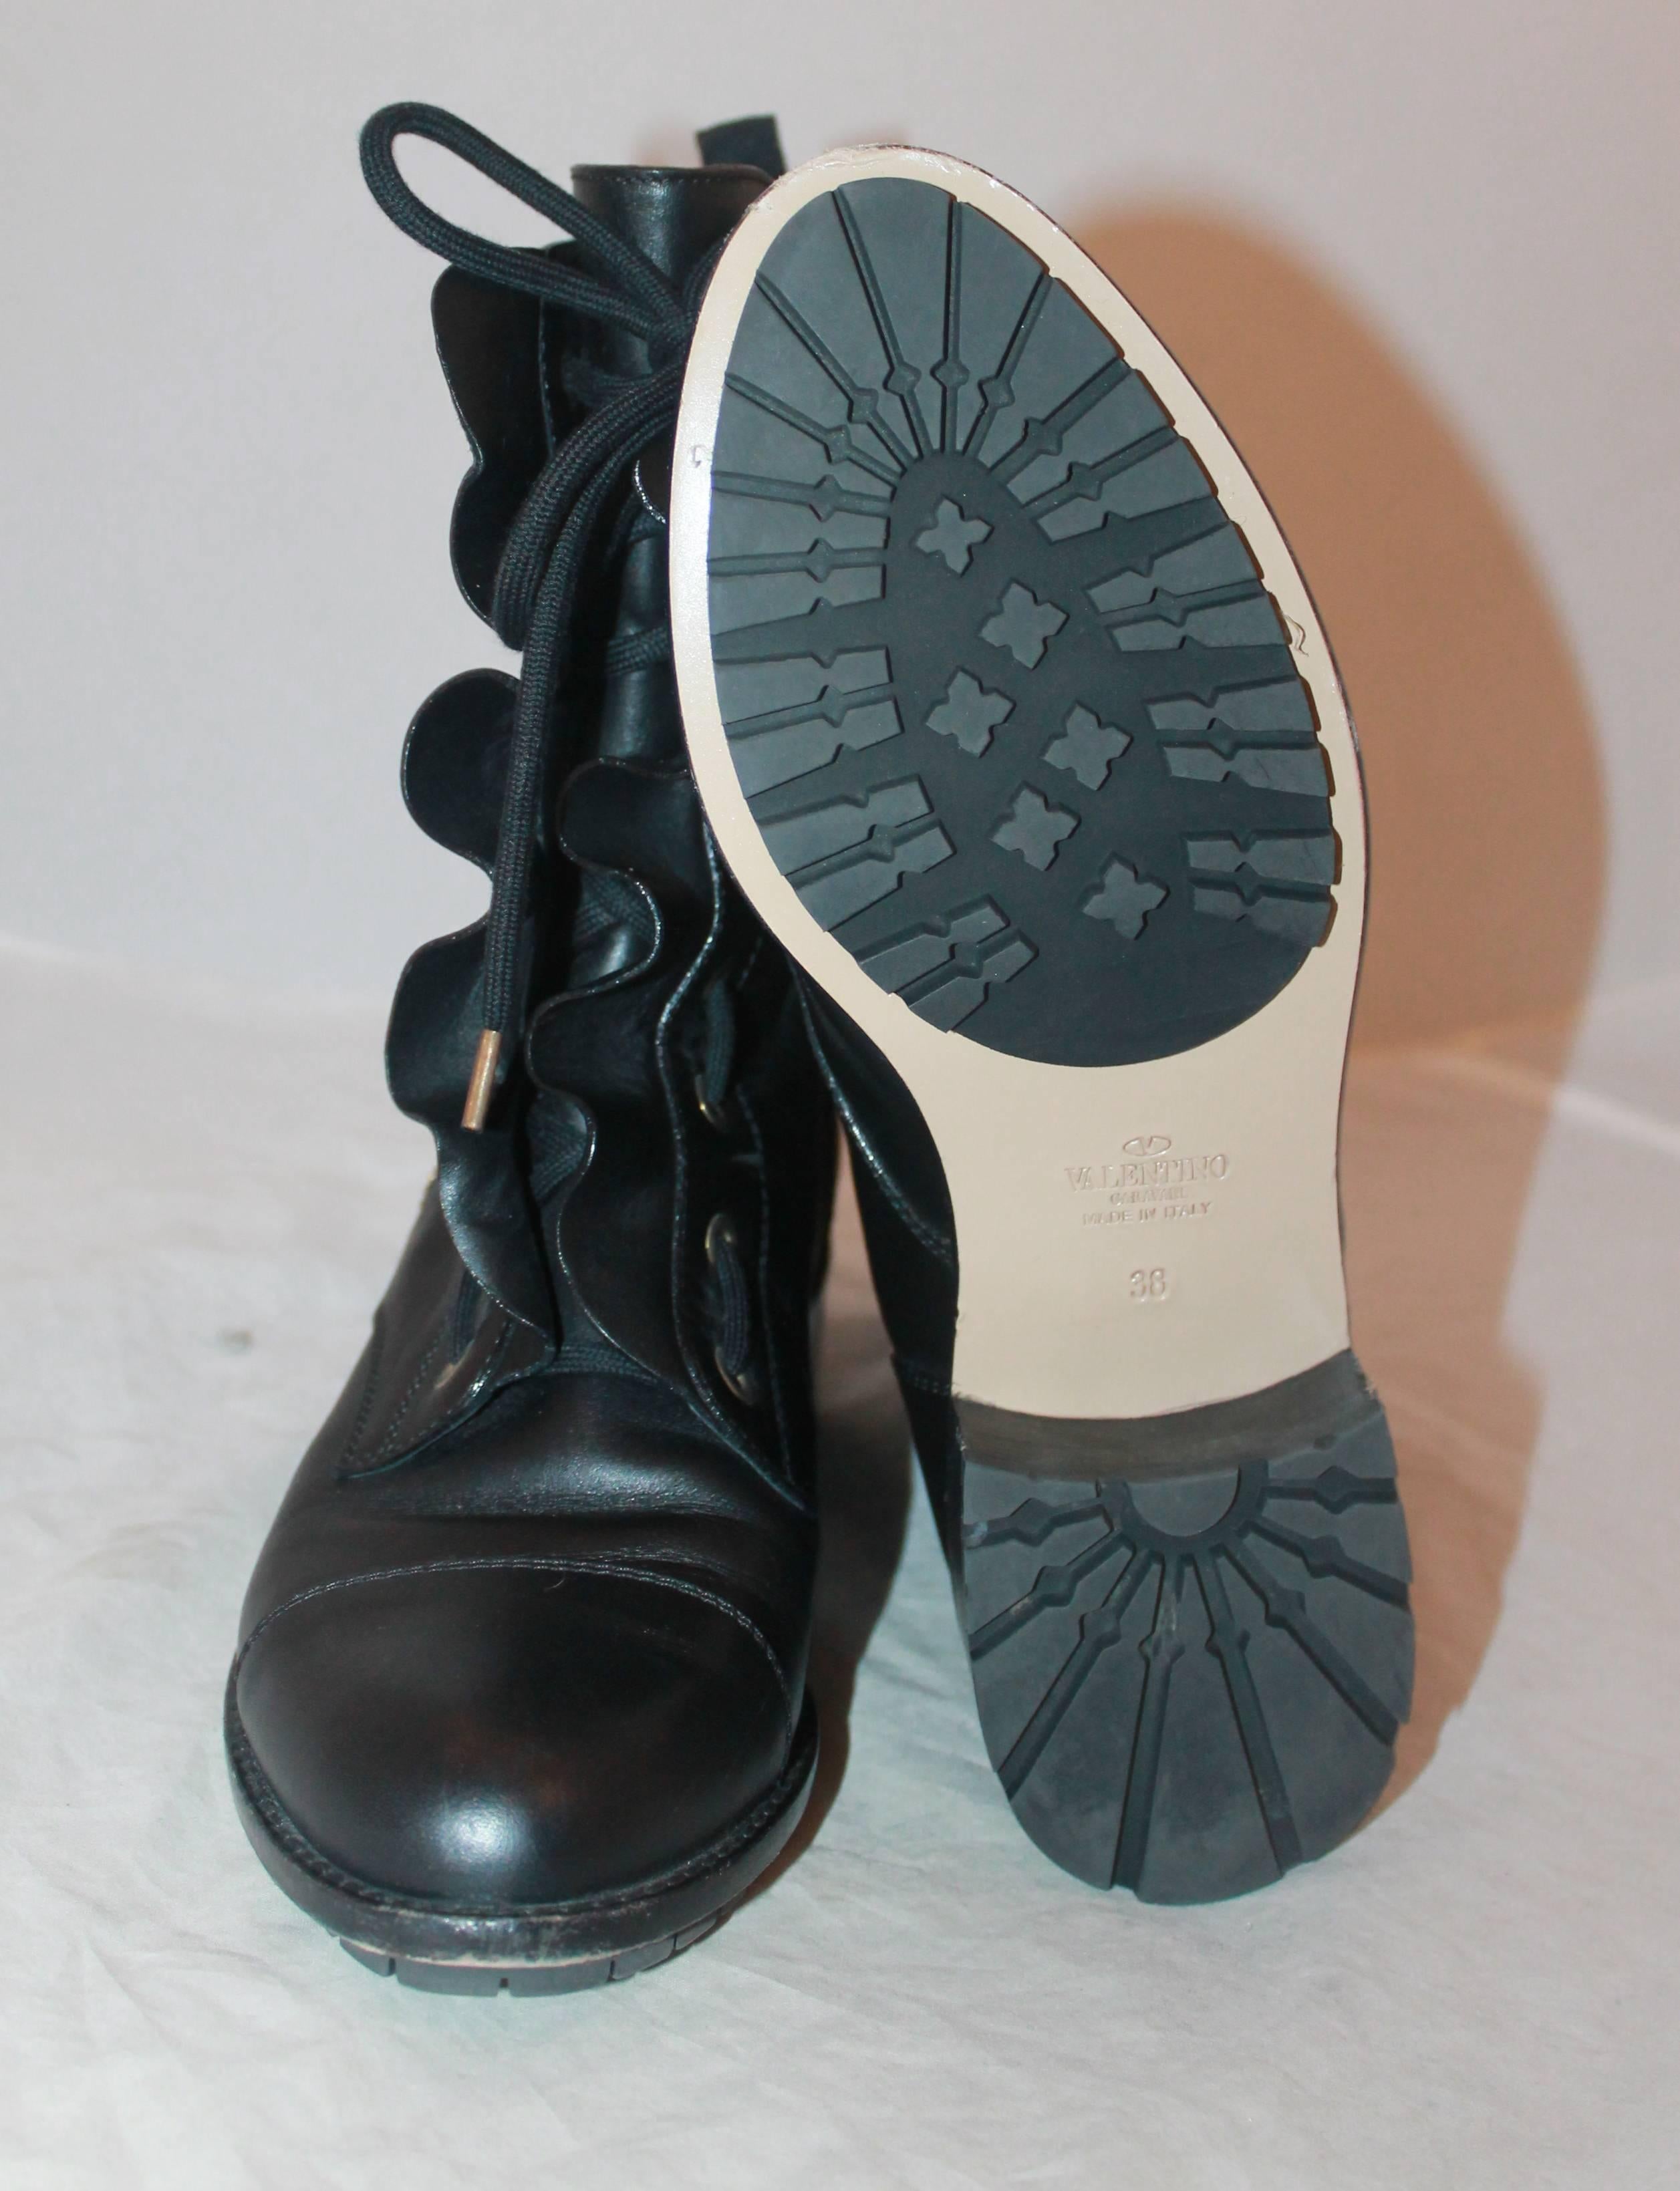 Valentino Black Leather Ruffle Combat Boots - 38 - Retail: $1200 1